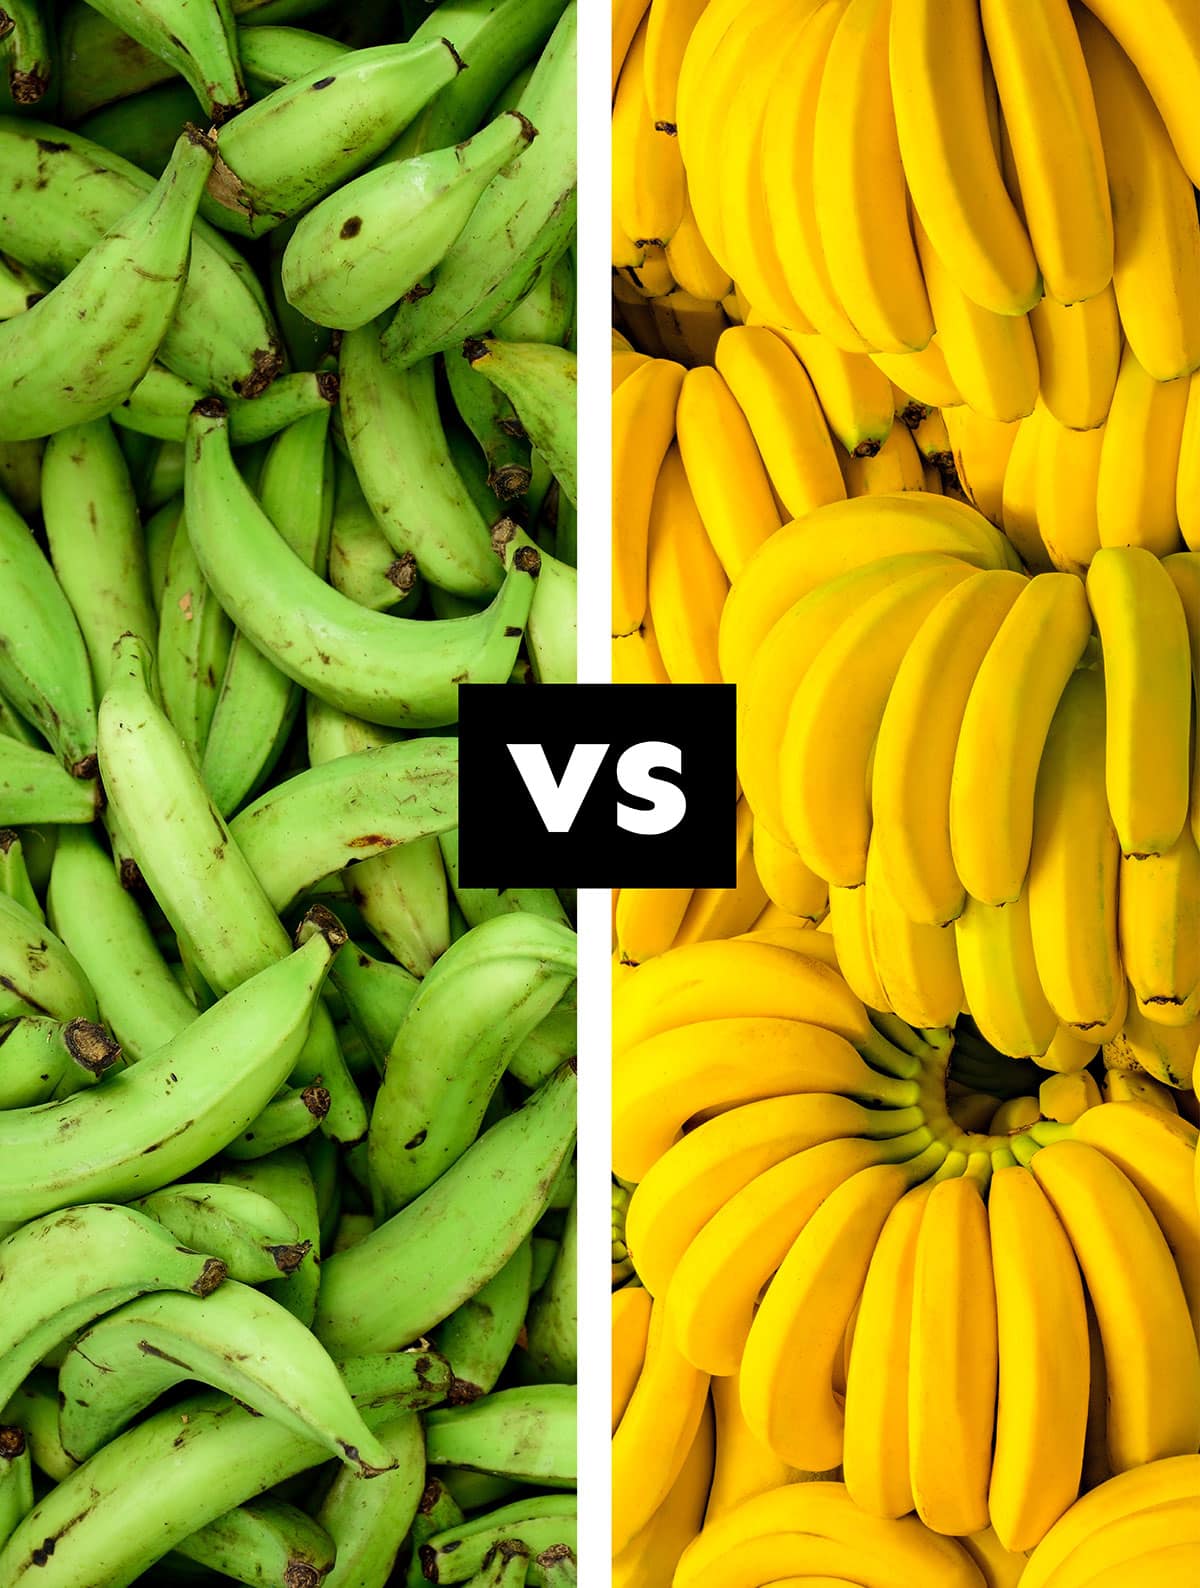 Plantains vs bananas.